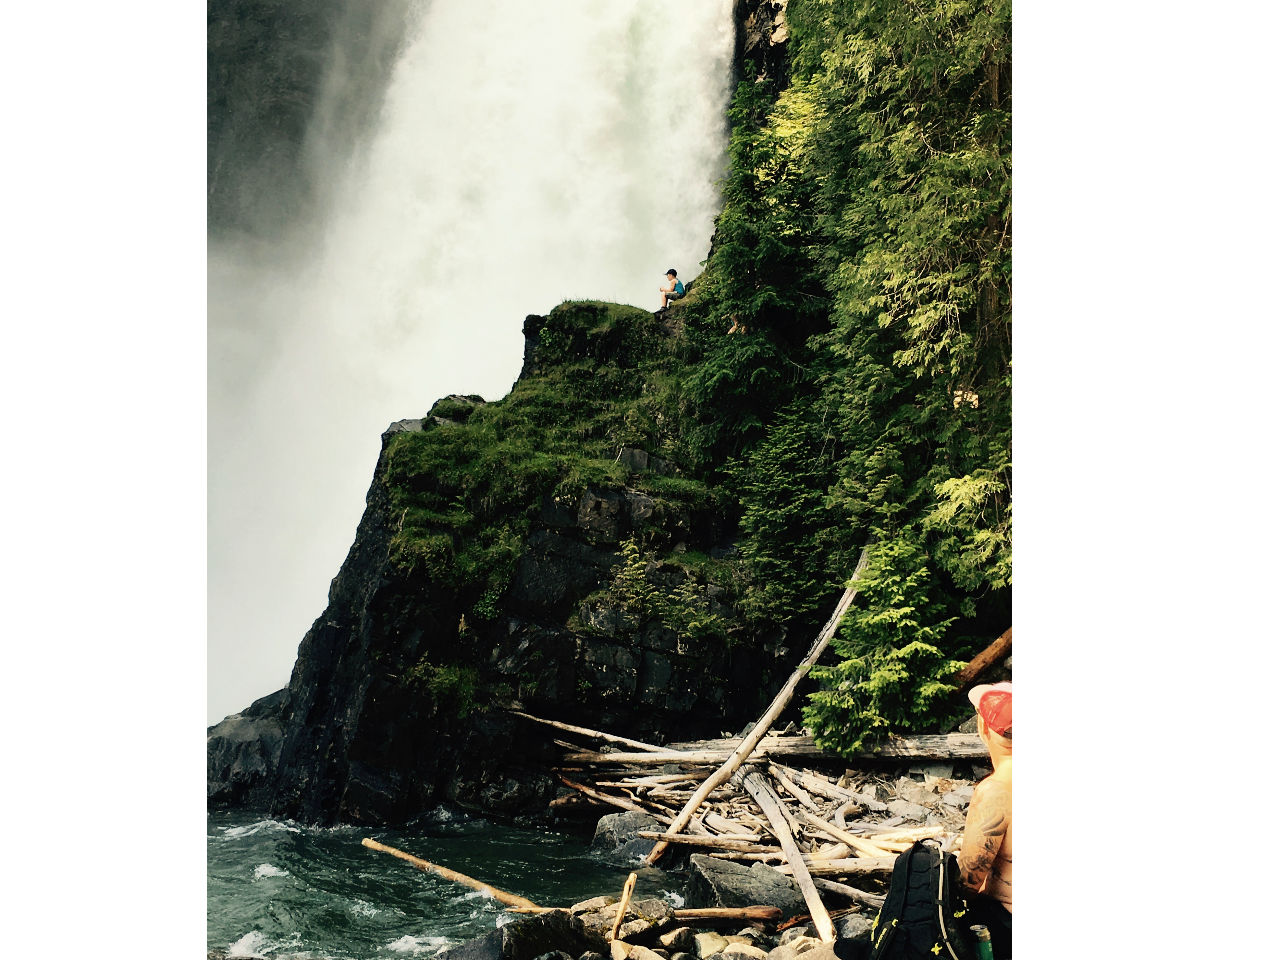 a little boy sitting by a waterfall